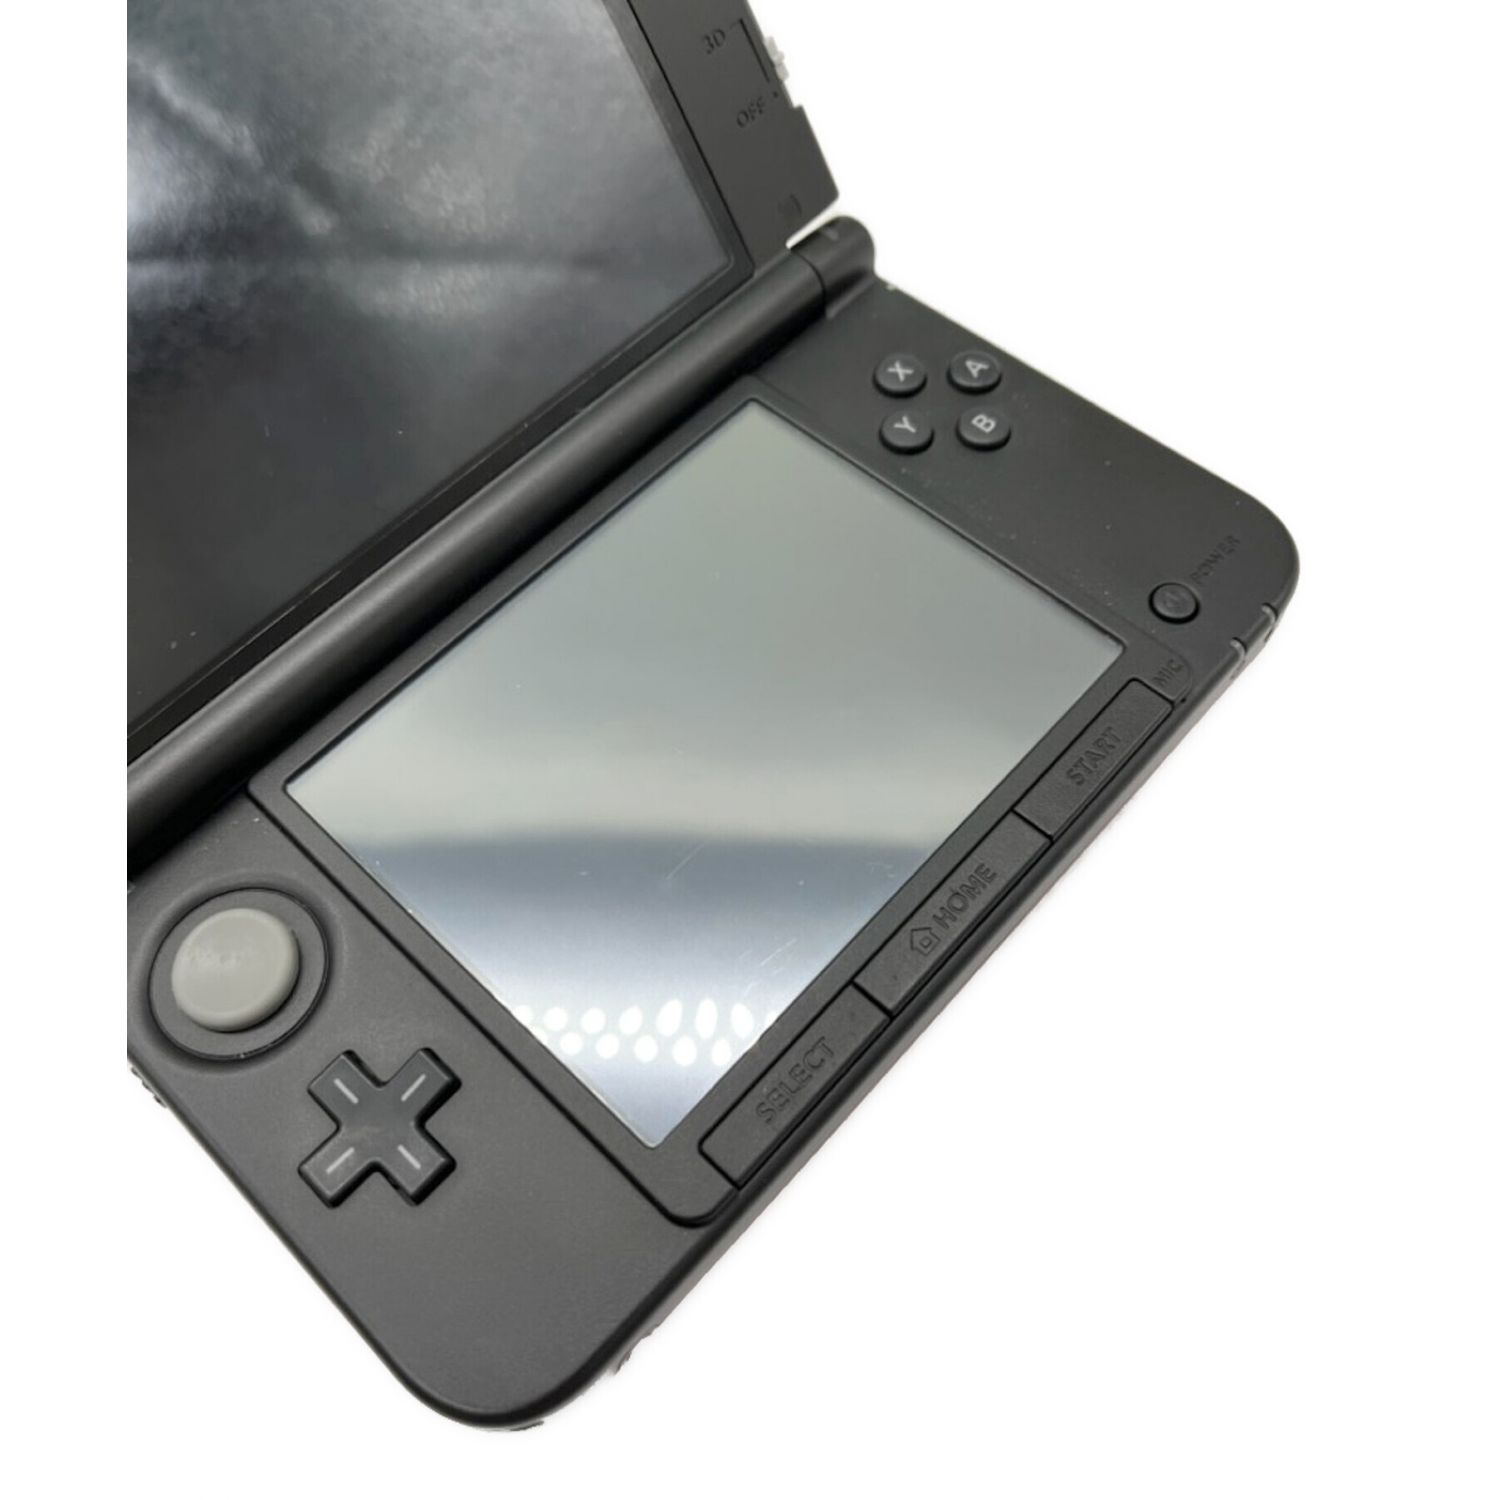 Nintendo (ニンテンドウ) 3DS LL SPR-001 動作確認済み｜トレファクONLINE